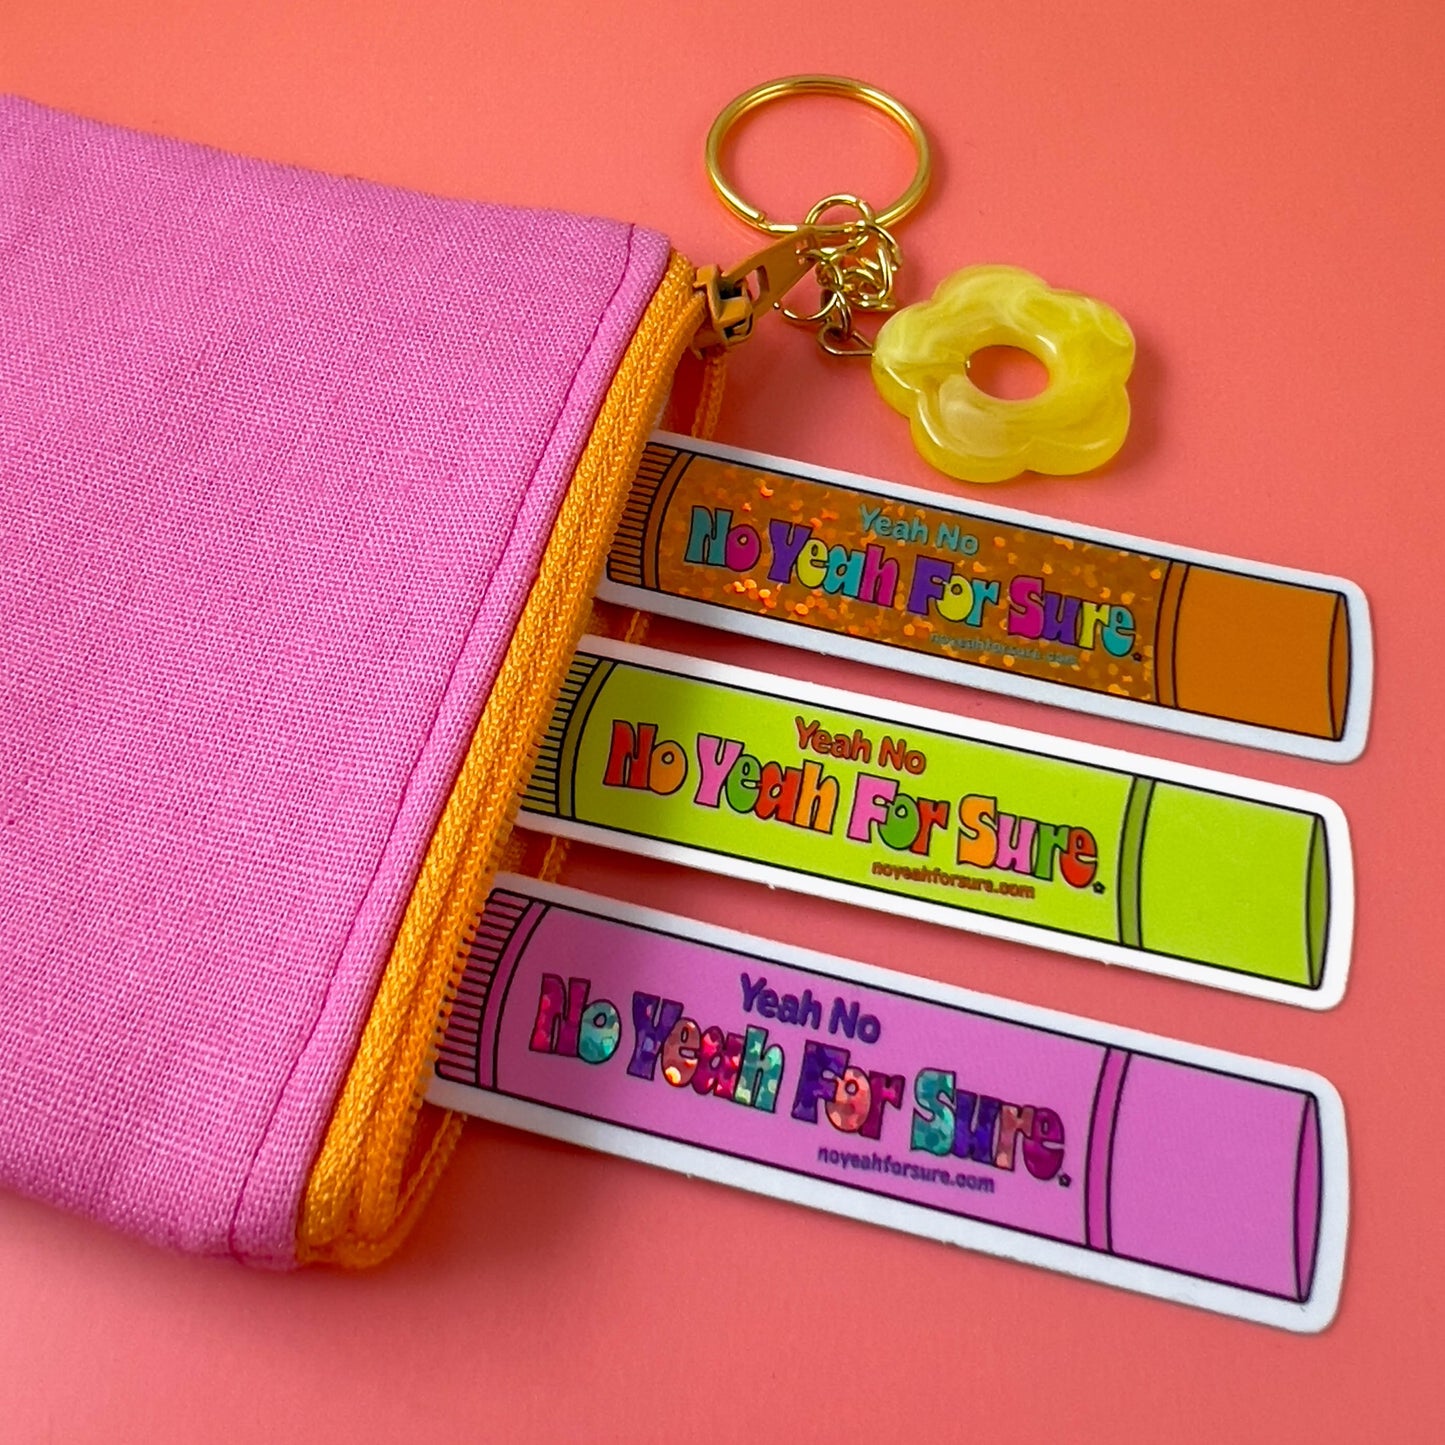 die cut vinyl lip gloss stickers in a pink zipper coin pouch